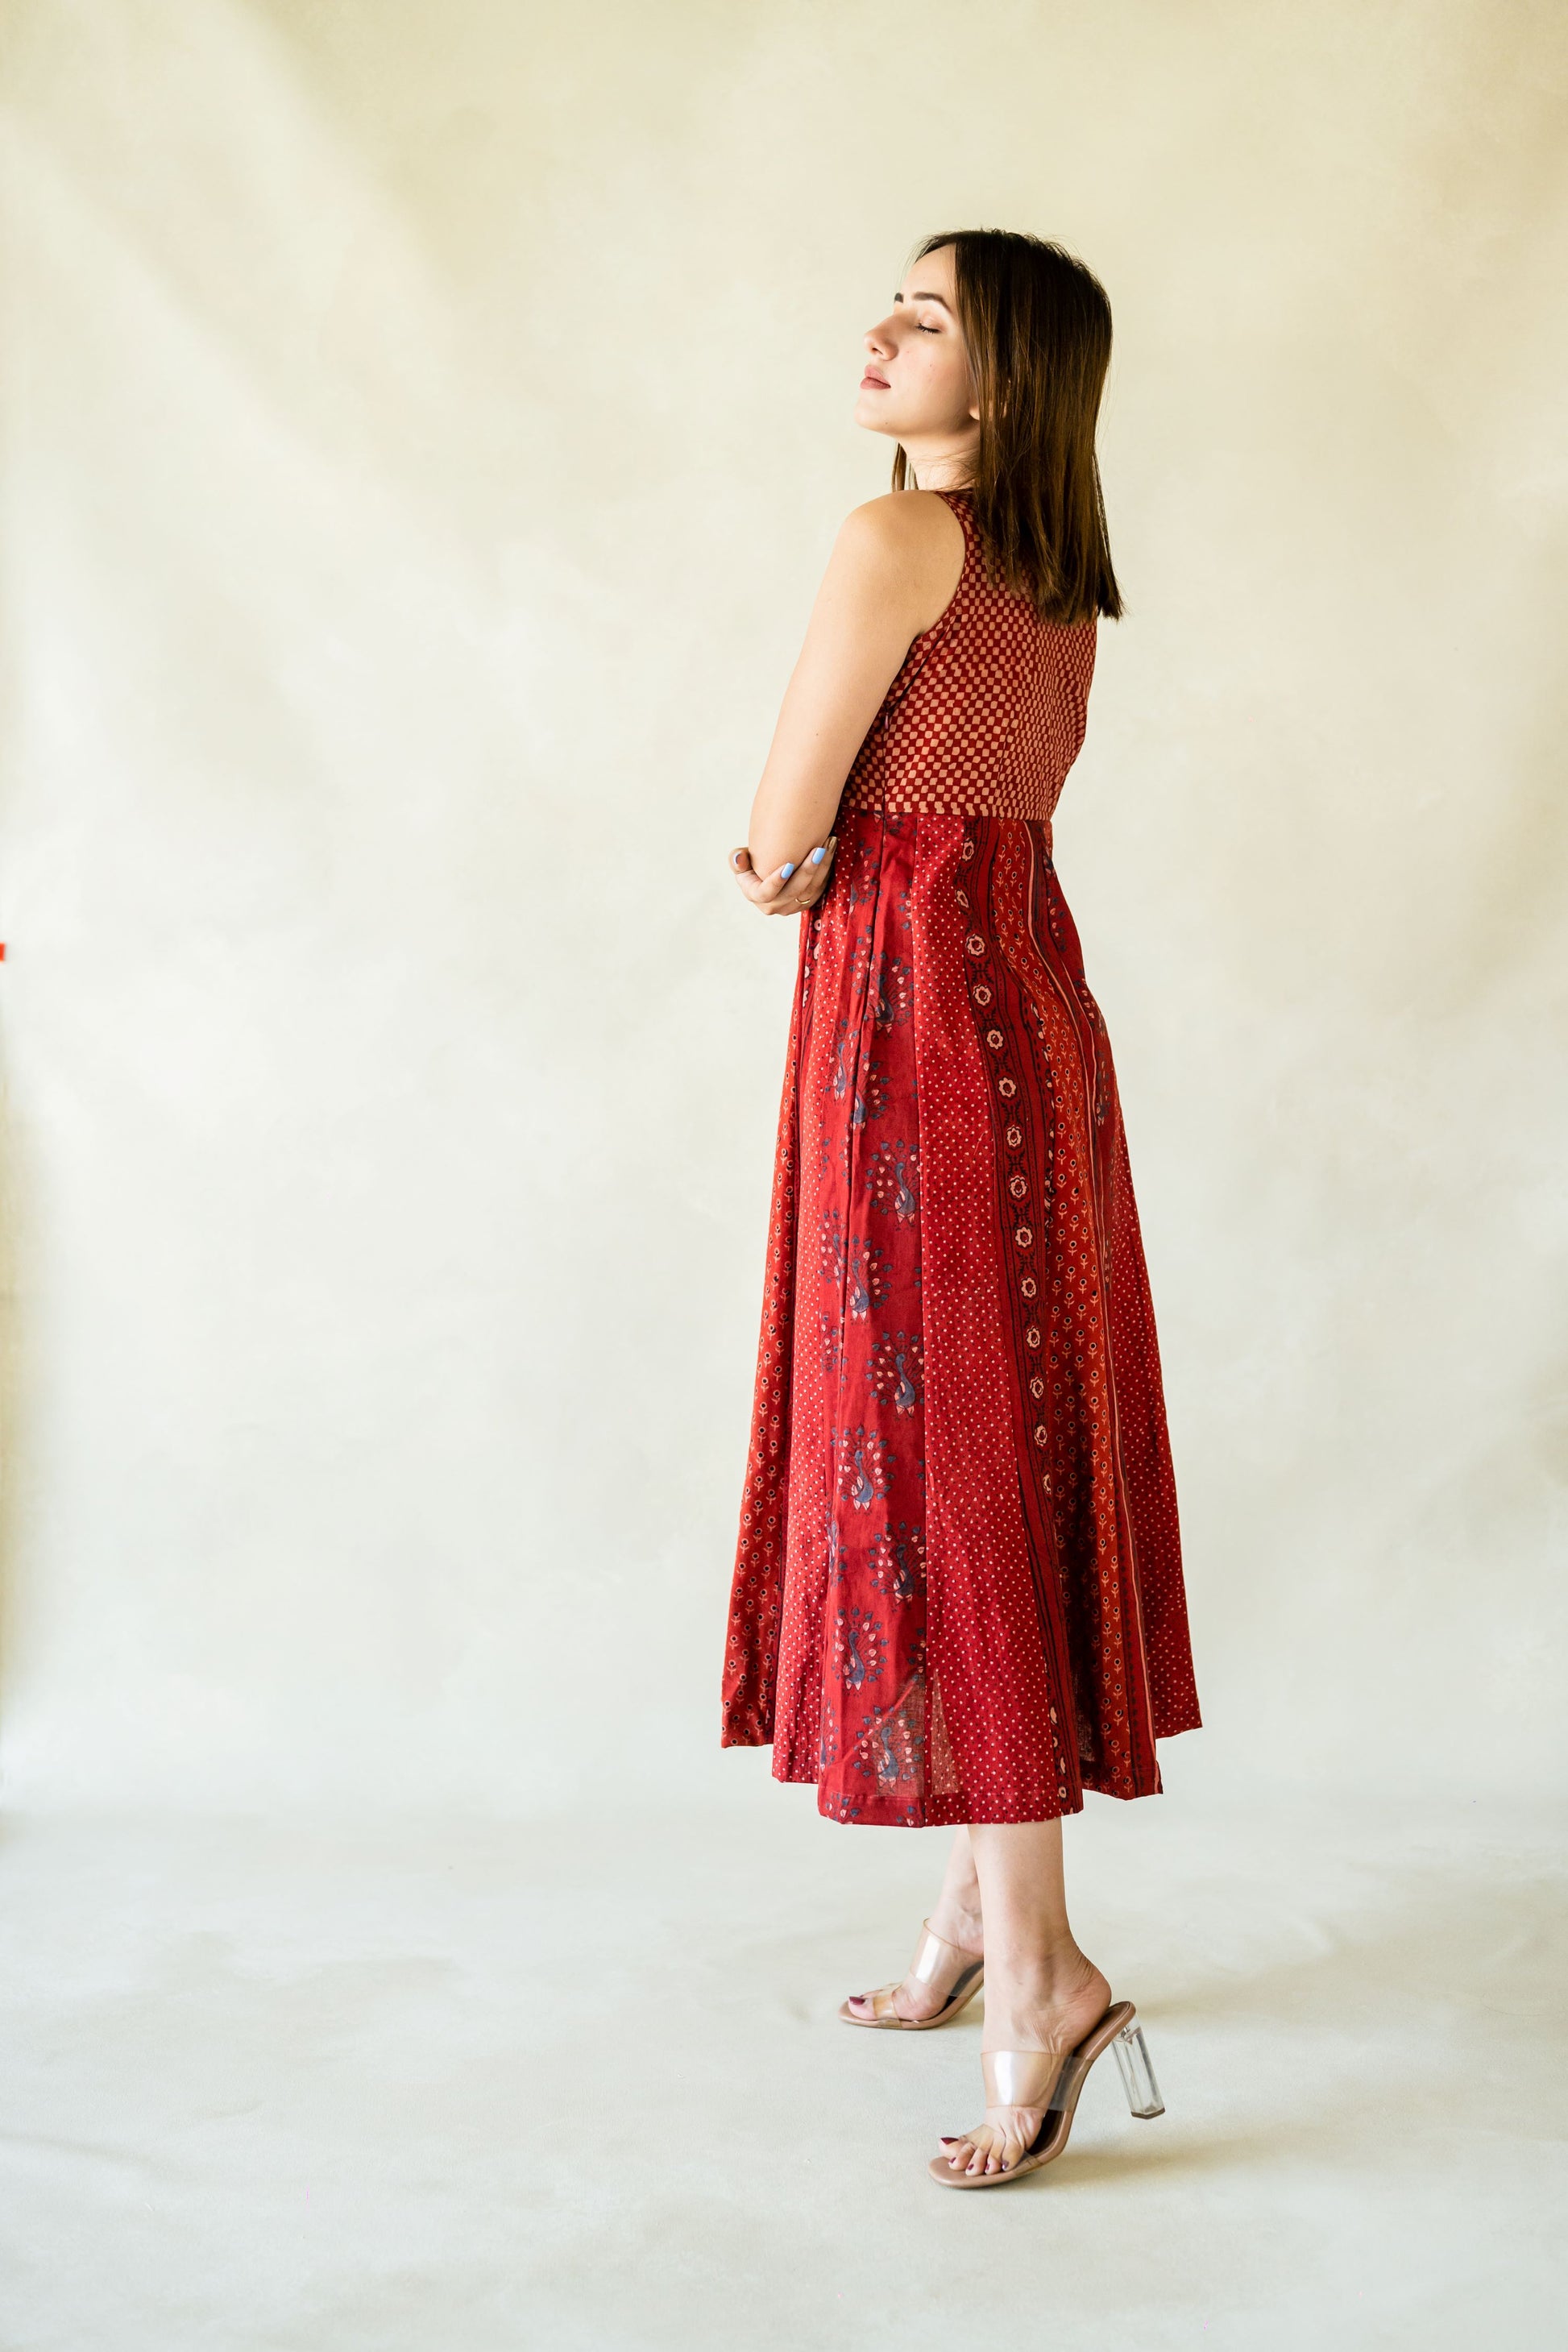 Madder red ajrakh fit and flared dress, Madder dyed fit and flared dress, Summer dress, Handmade cotton dress, Slow fashion